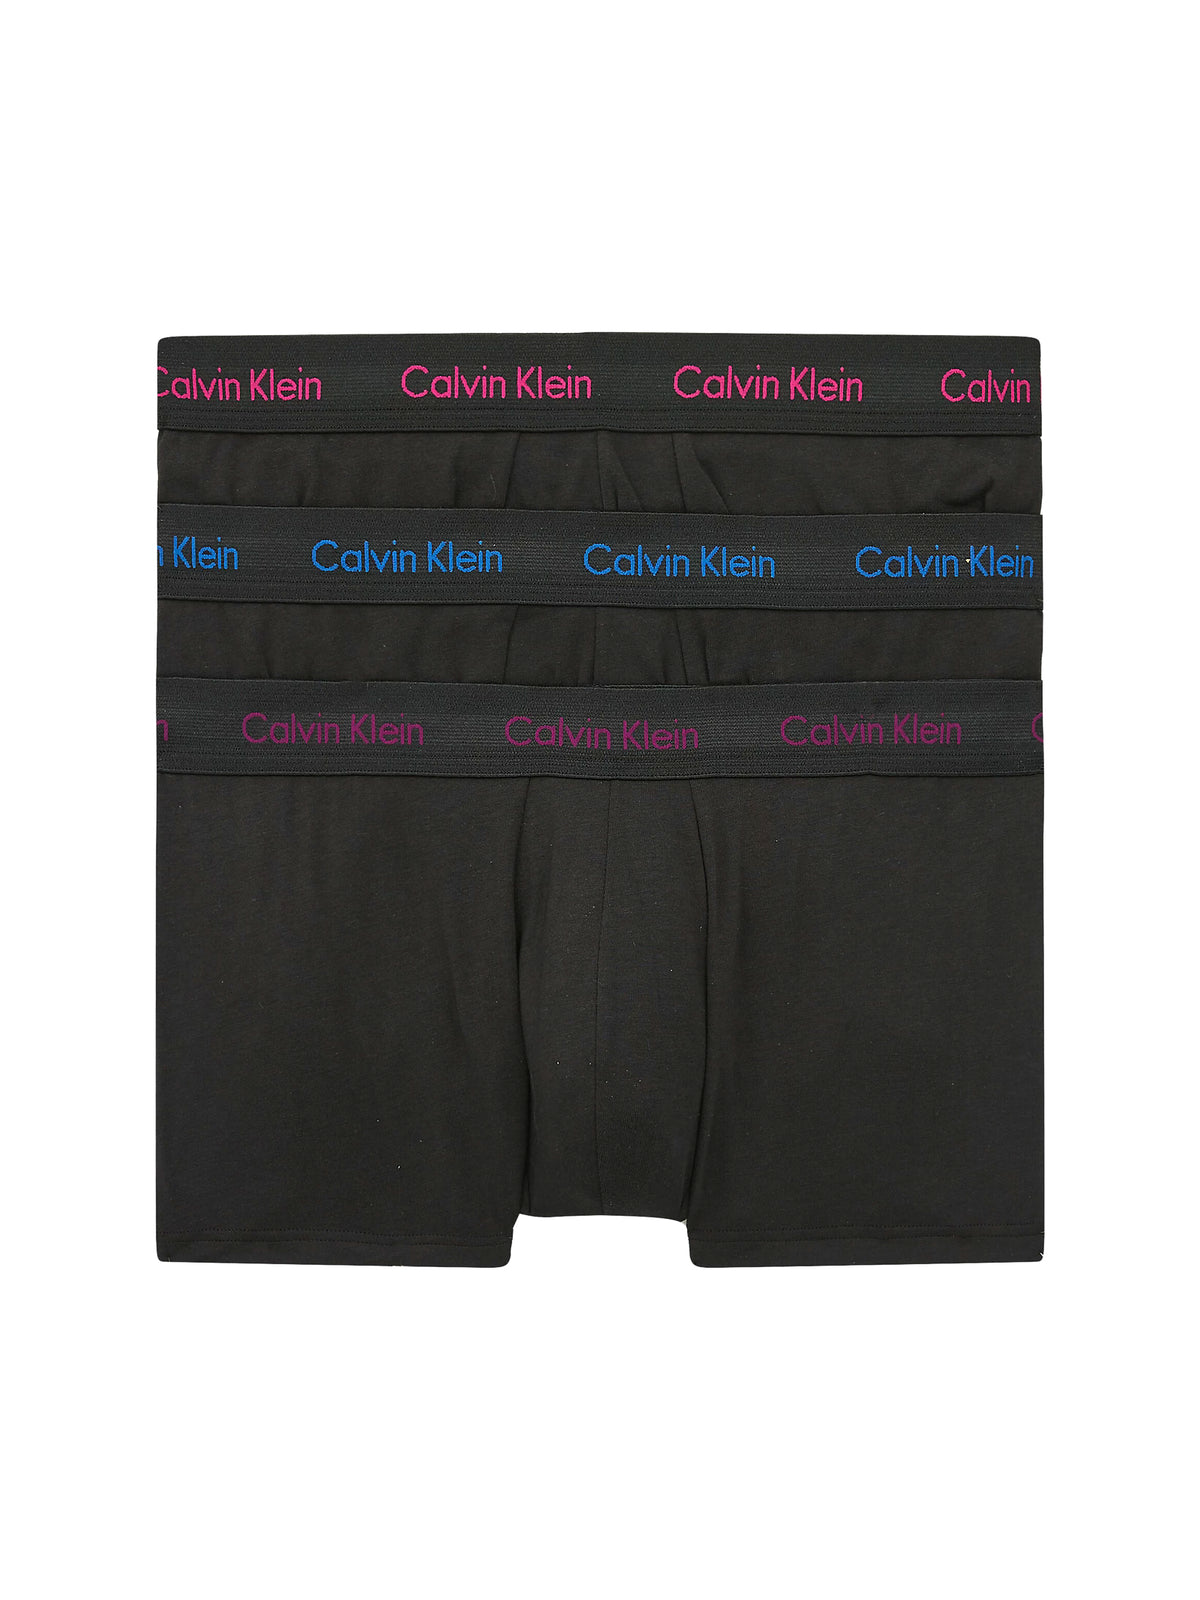 Mens Calvin Klein Boxer Shorts Low Rise Trunks 3 Pack, 06, U2664G, B-Groovy Plum/Bright Rose/Blue Logo